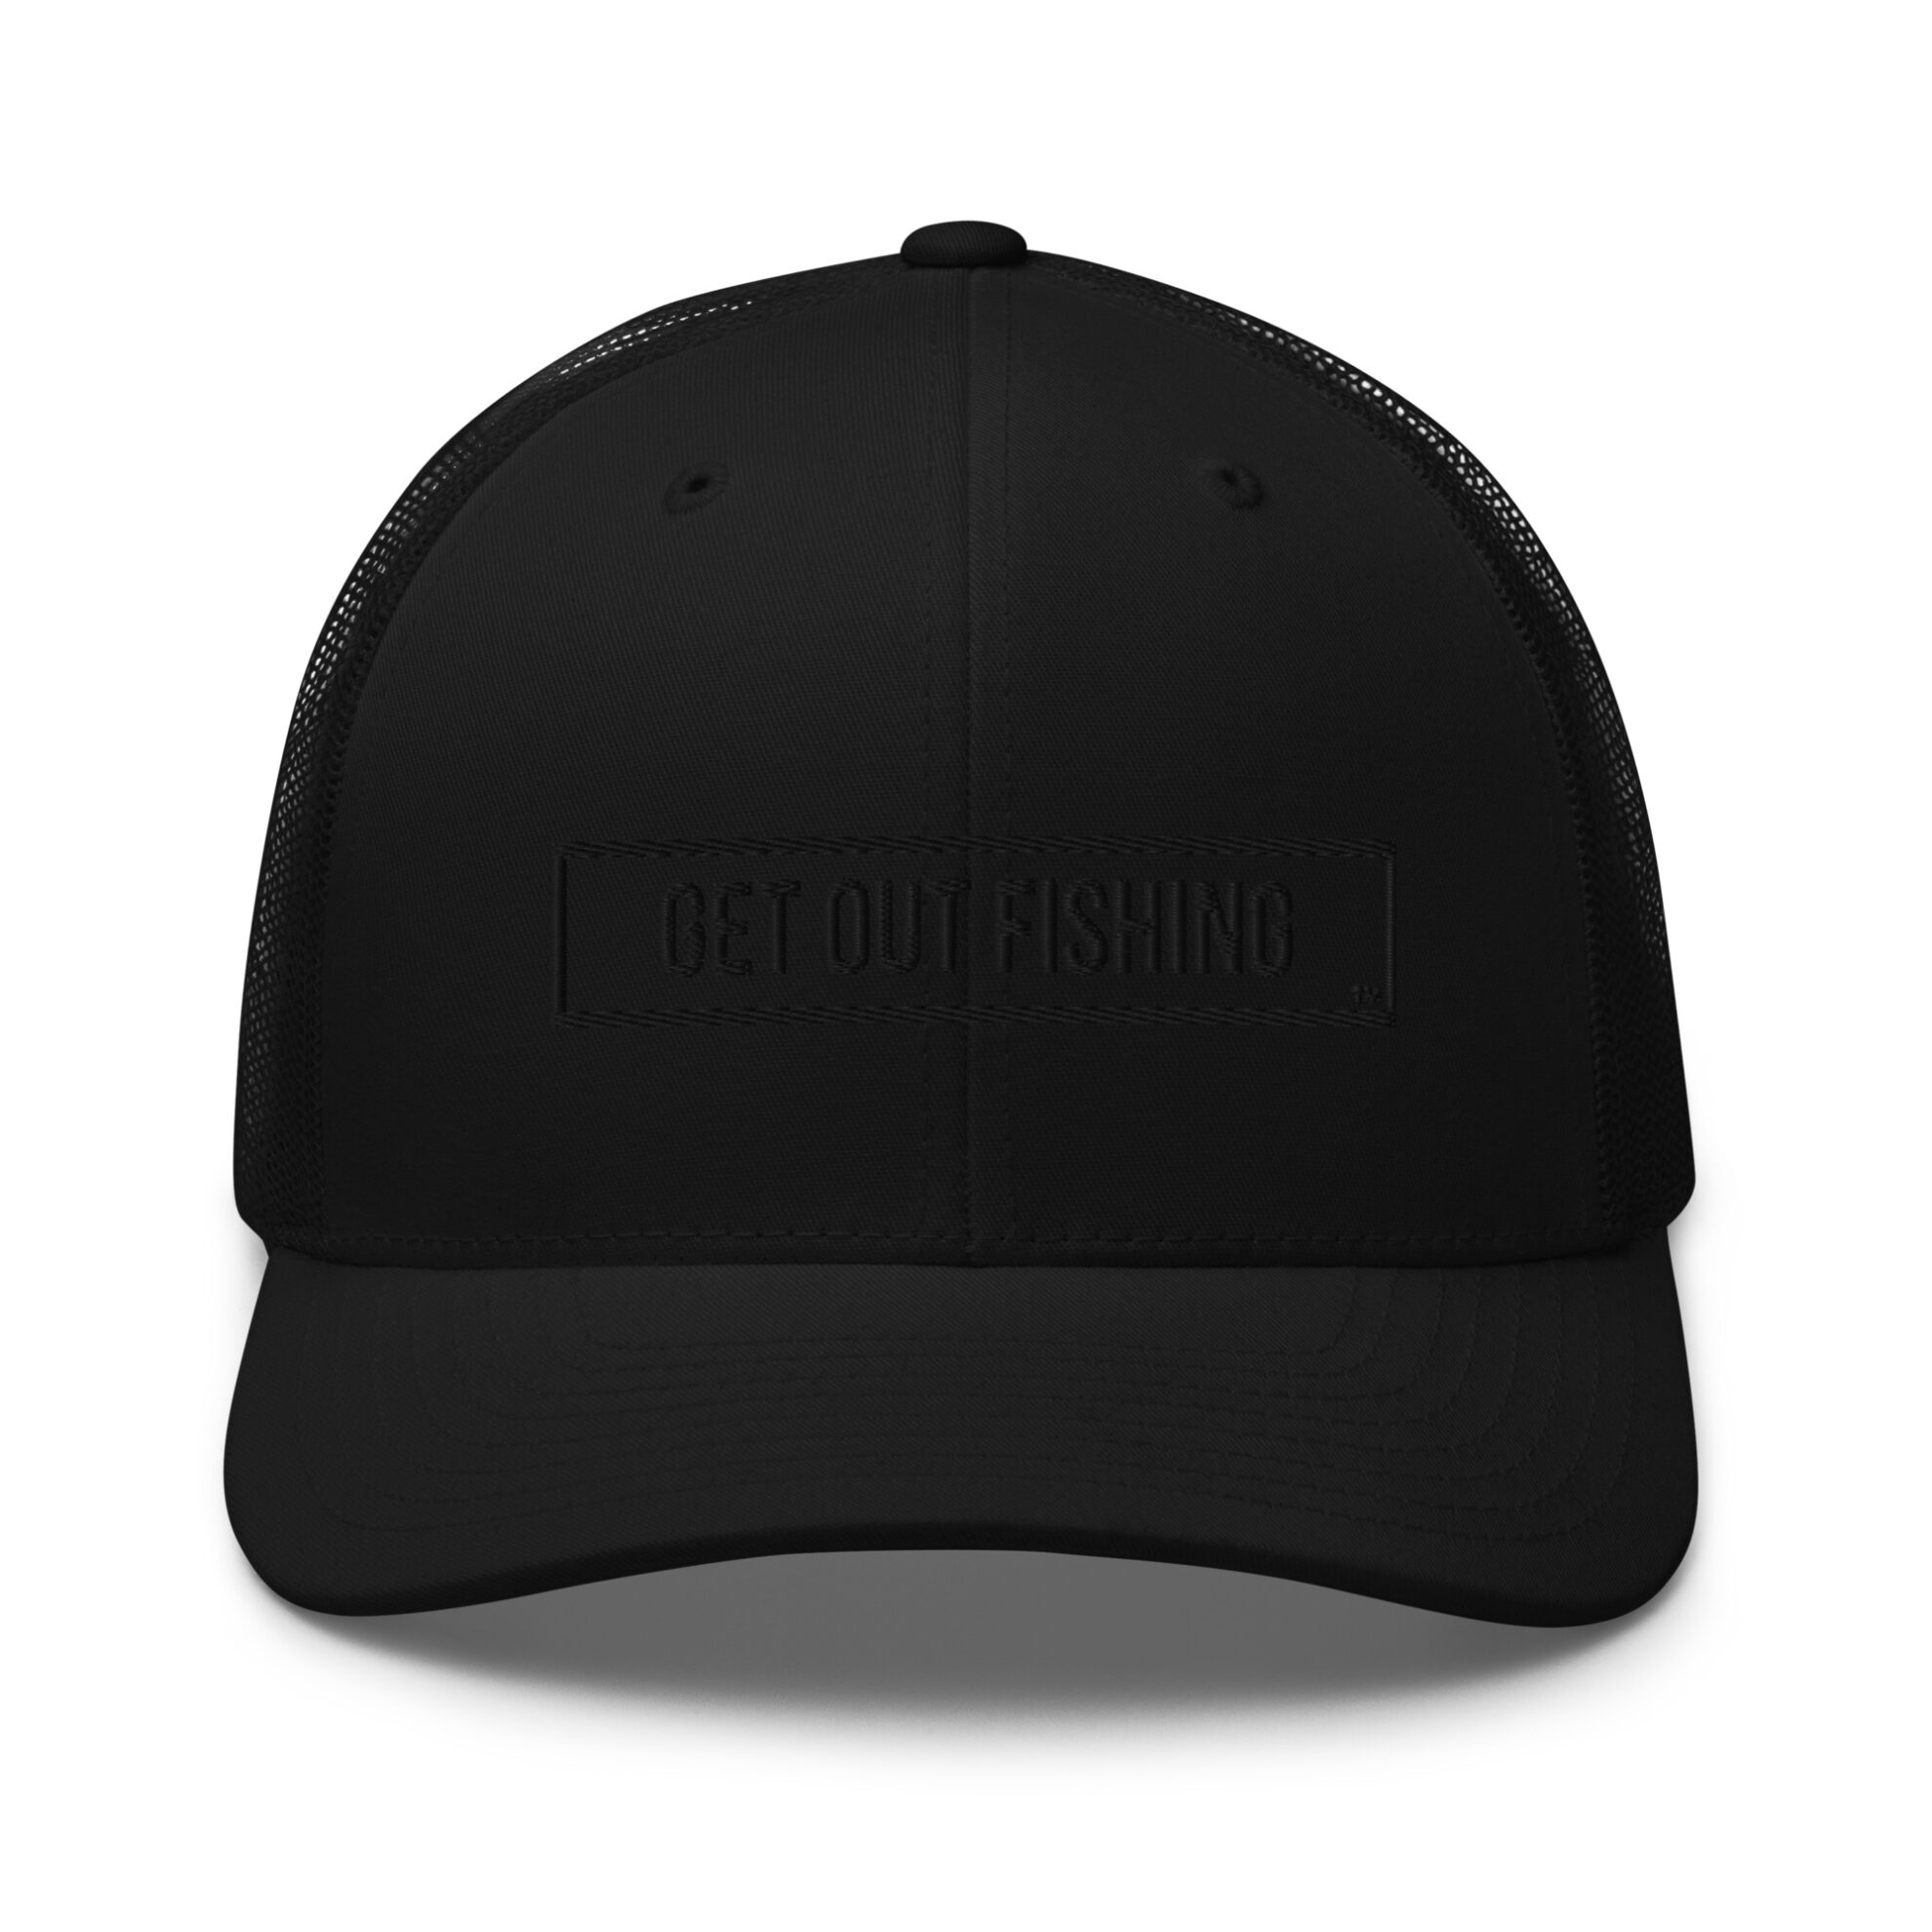 https://getoutfishing.net/wp-content/uploads/2023/05/retro-trucker-hat-black-front-645520889a73a-scaled.jpg